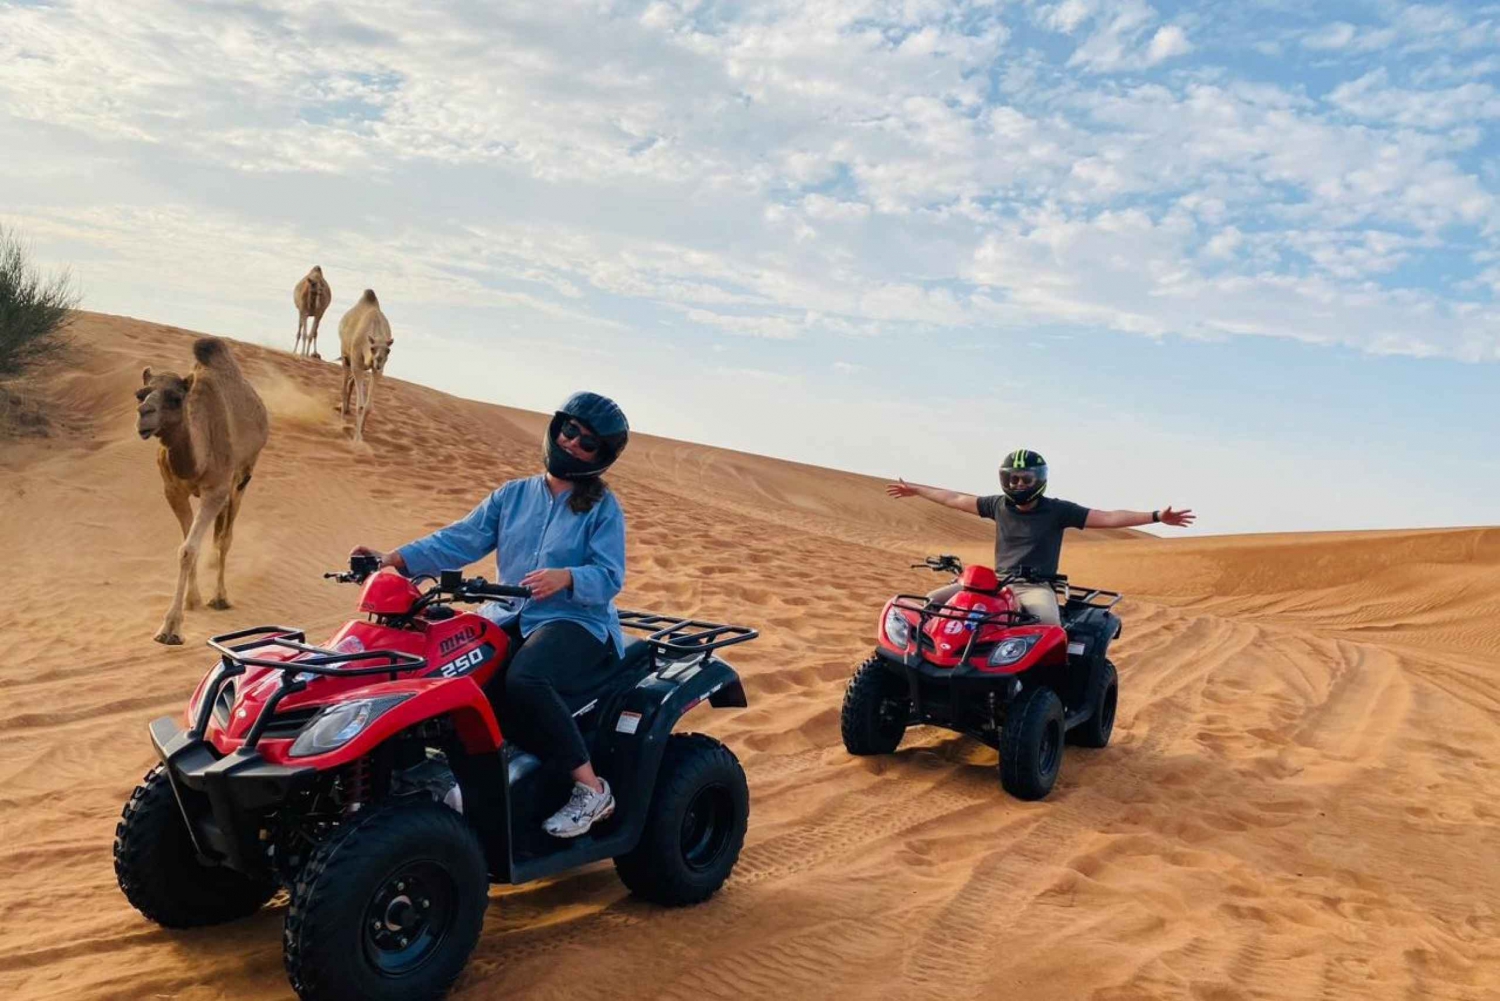 Dubai: Safari de aventura en quad, paseo en camello y refrescos